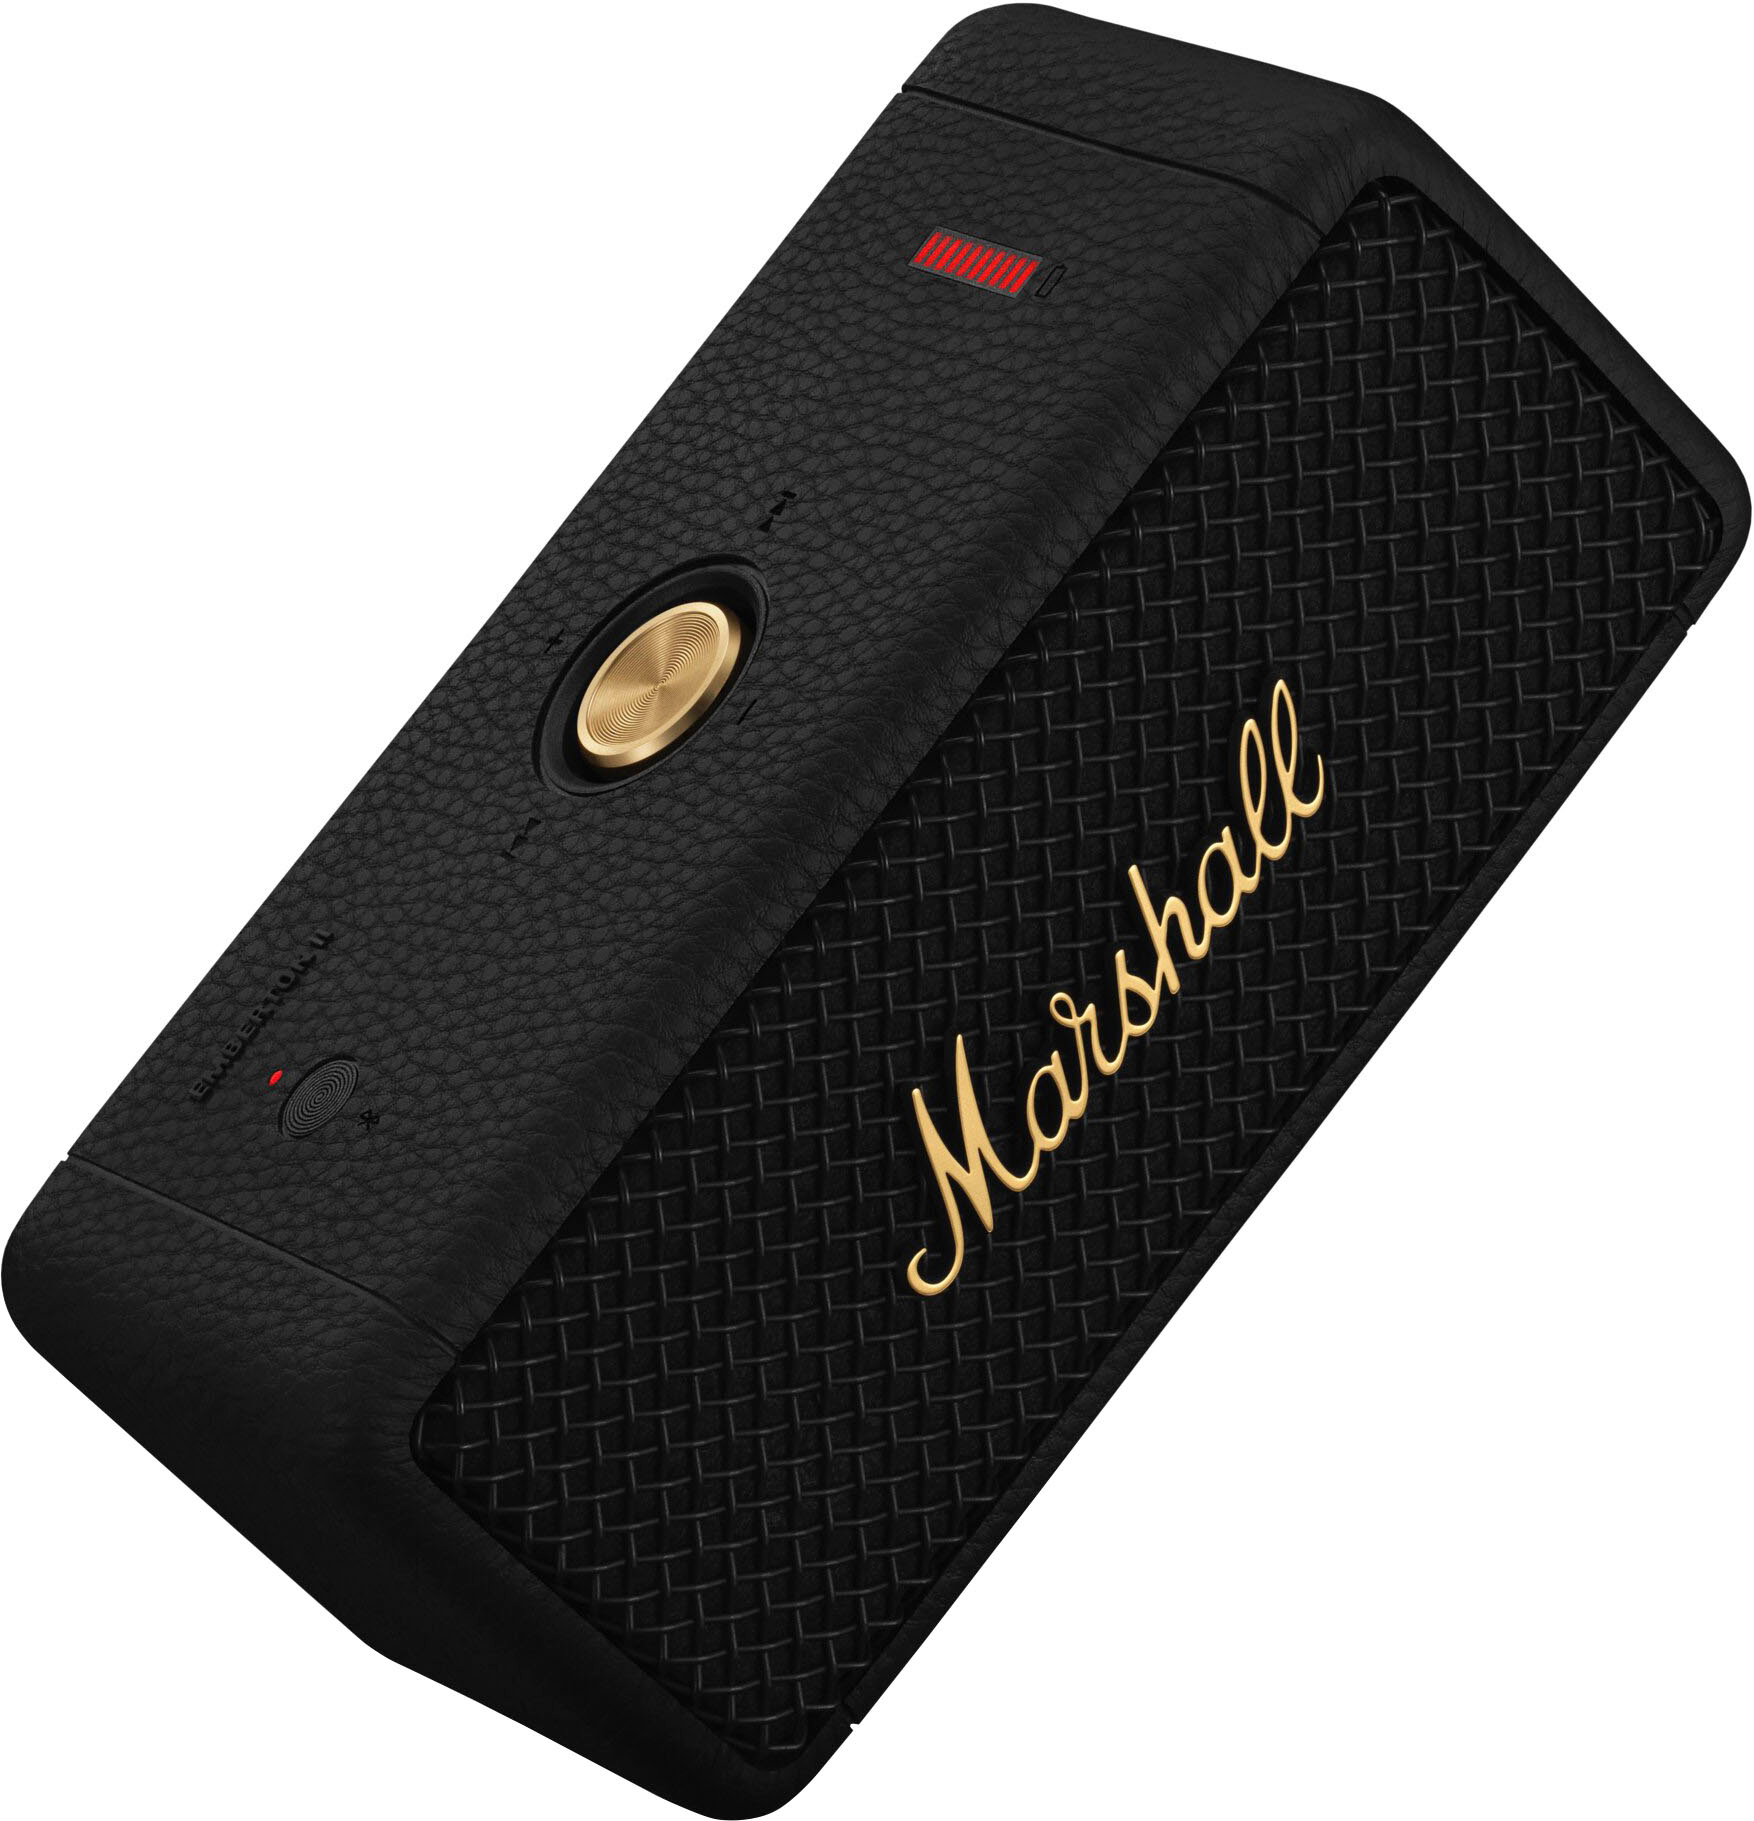 Marshall Emberton II Portable Bluetooth Speaker - Black & Brass & Emberton  Bluetooth Portable Speaker - Black : Electronics 